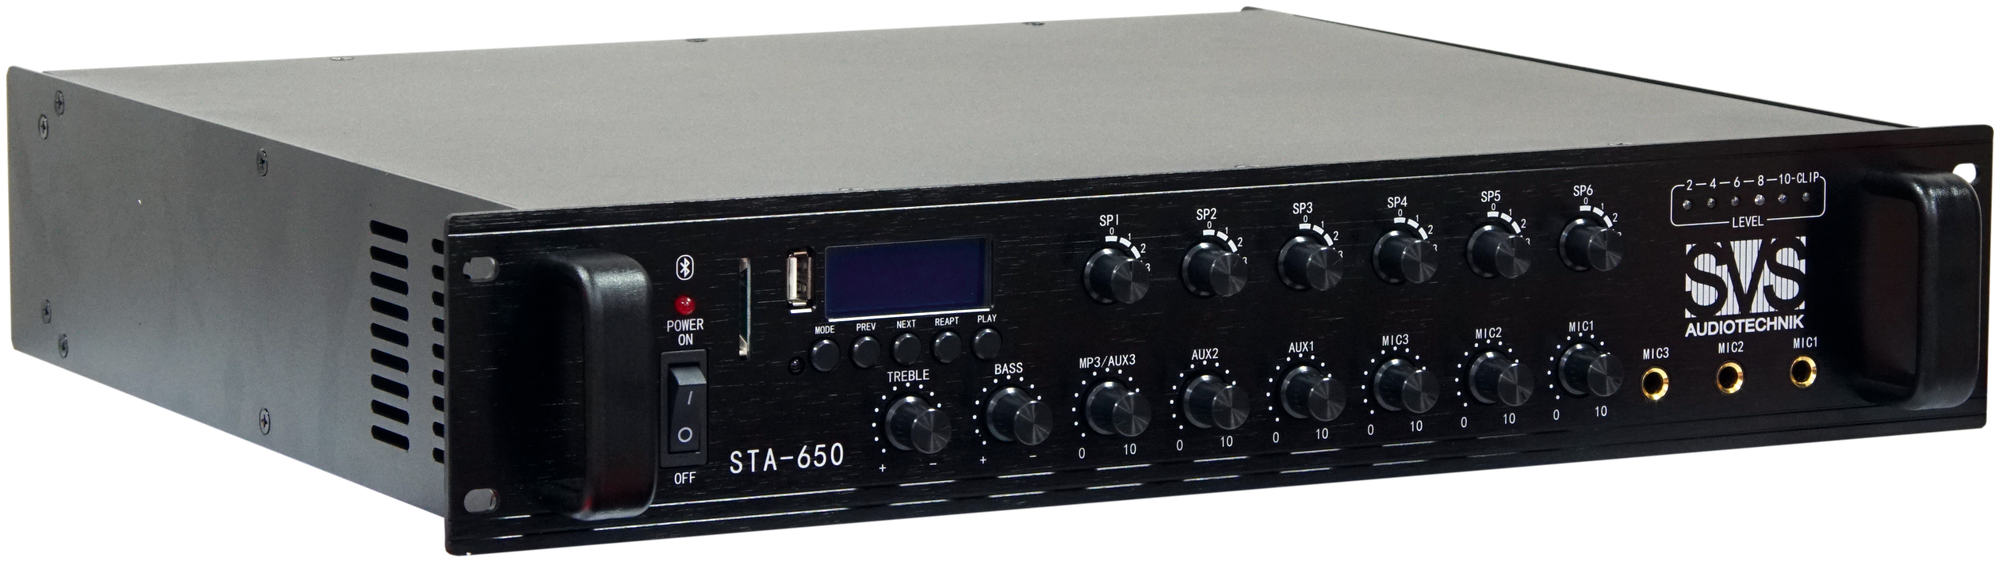 SVS Audiotechnik STA-650 радиоузел 6 зон усилитель мощности 650 Вт